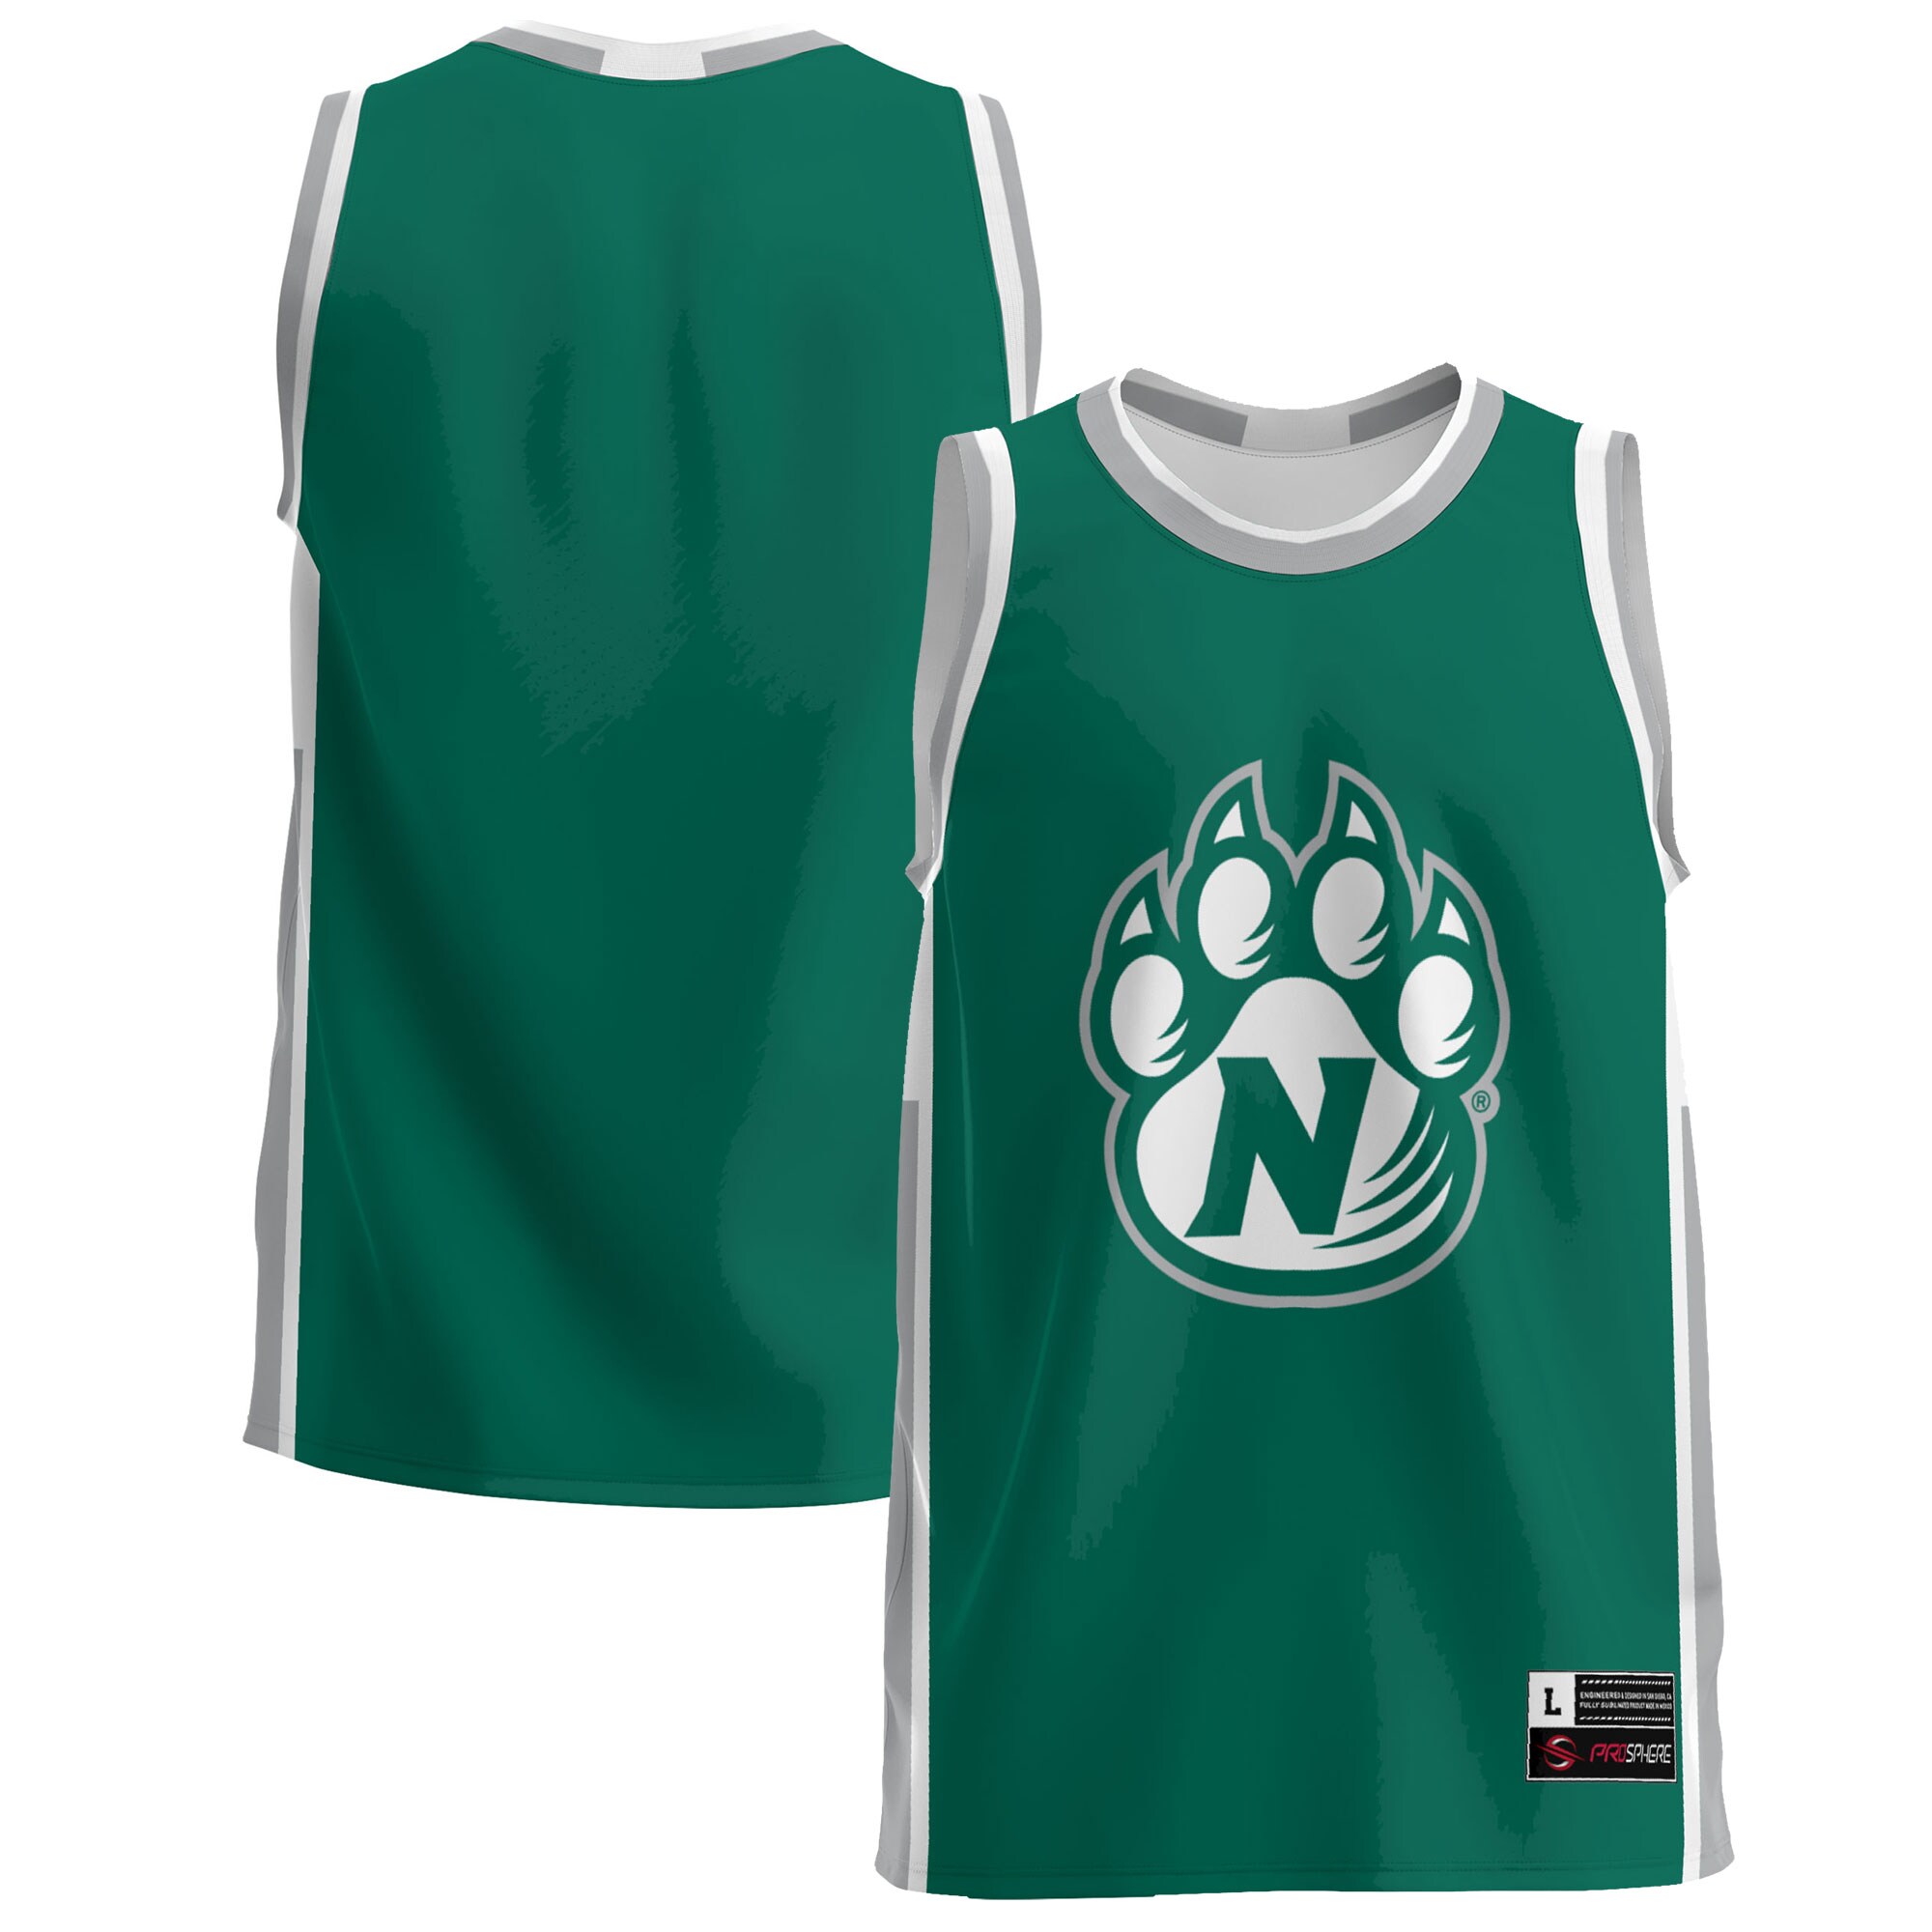 Northwest Missouri State Bearcats Basketball Jersey - Green For Youth Women Men